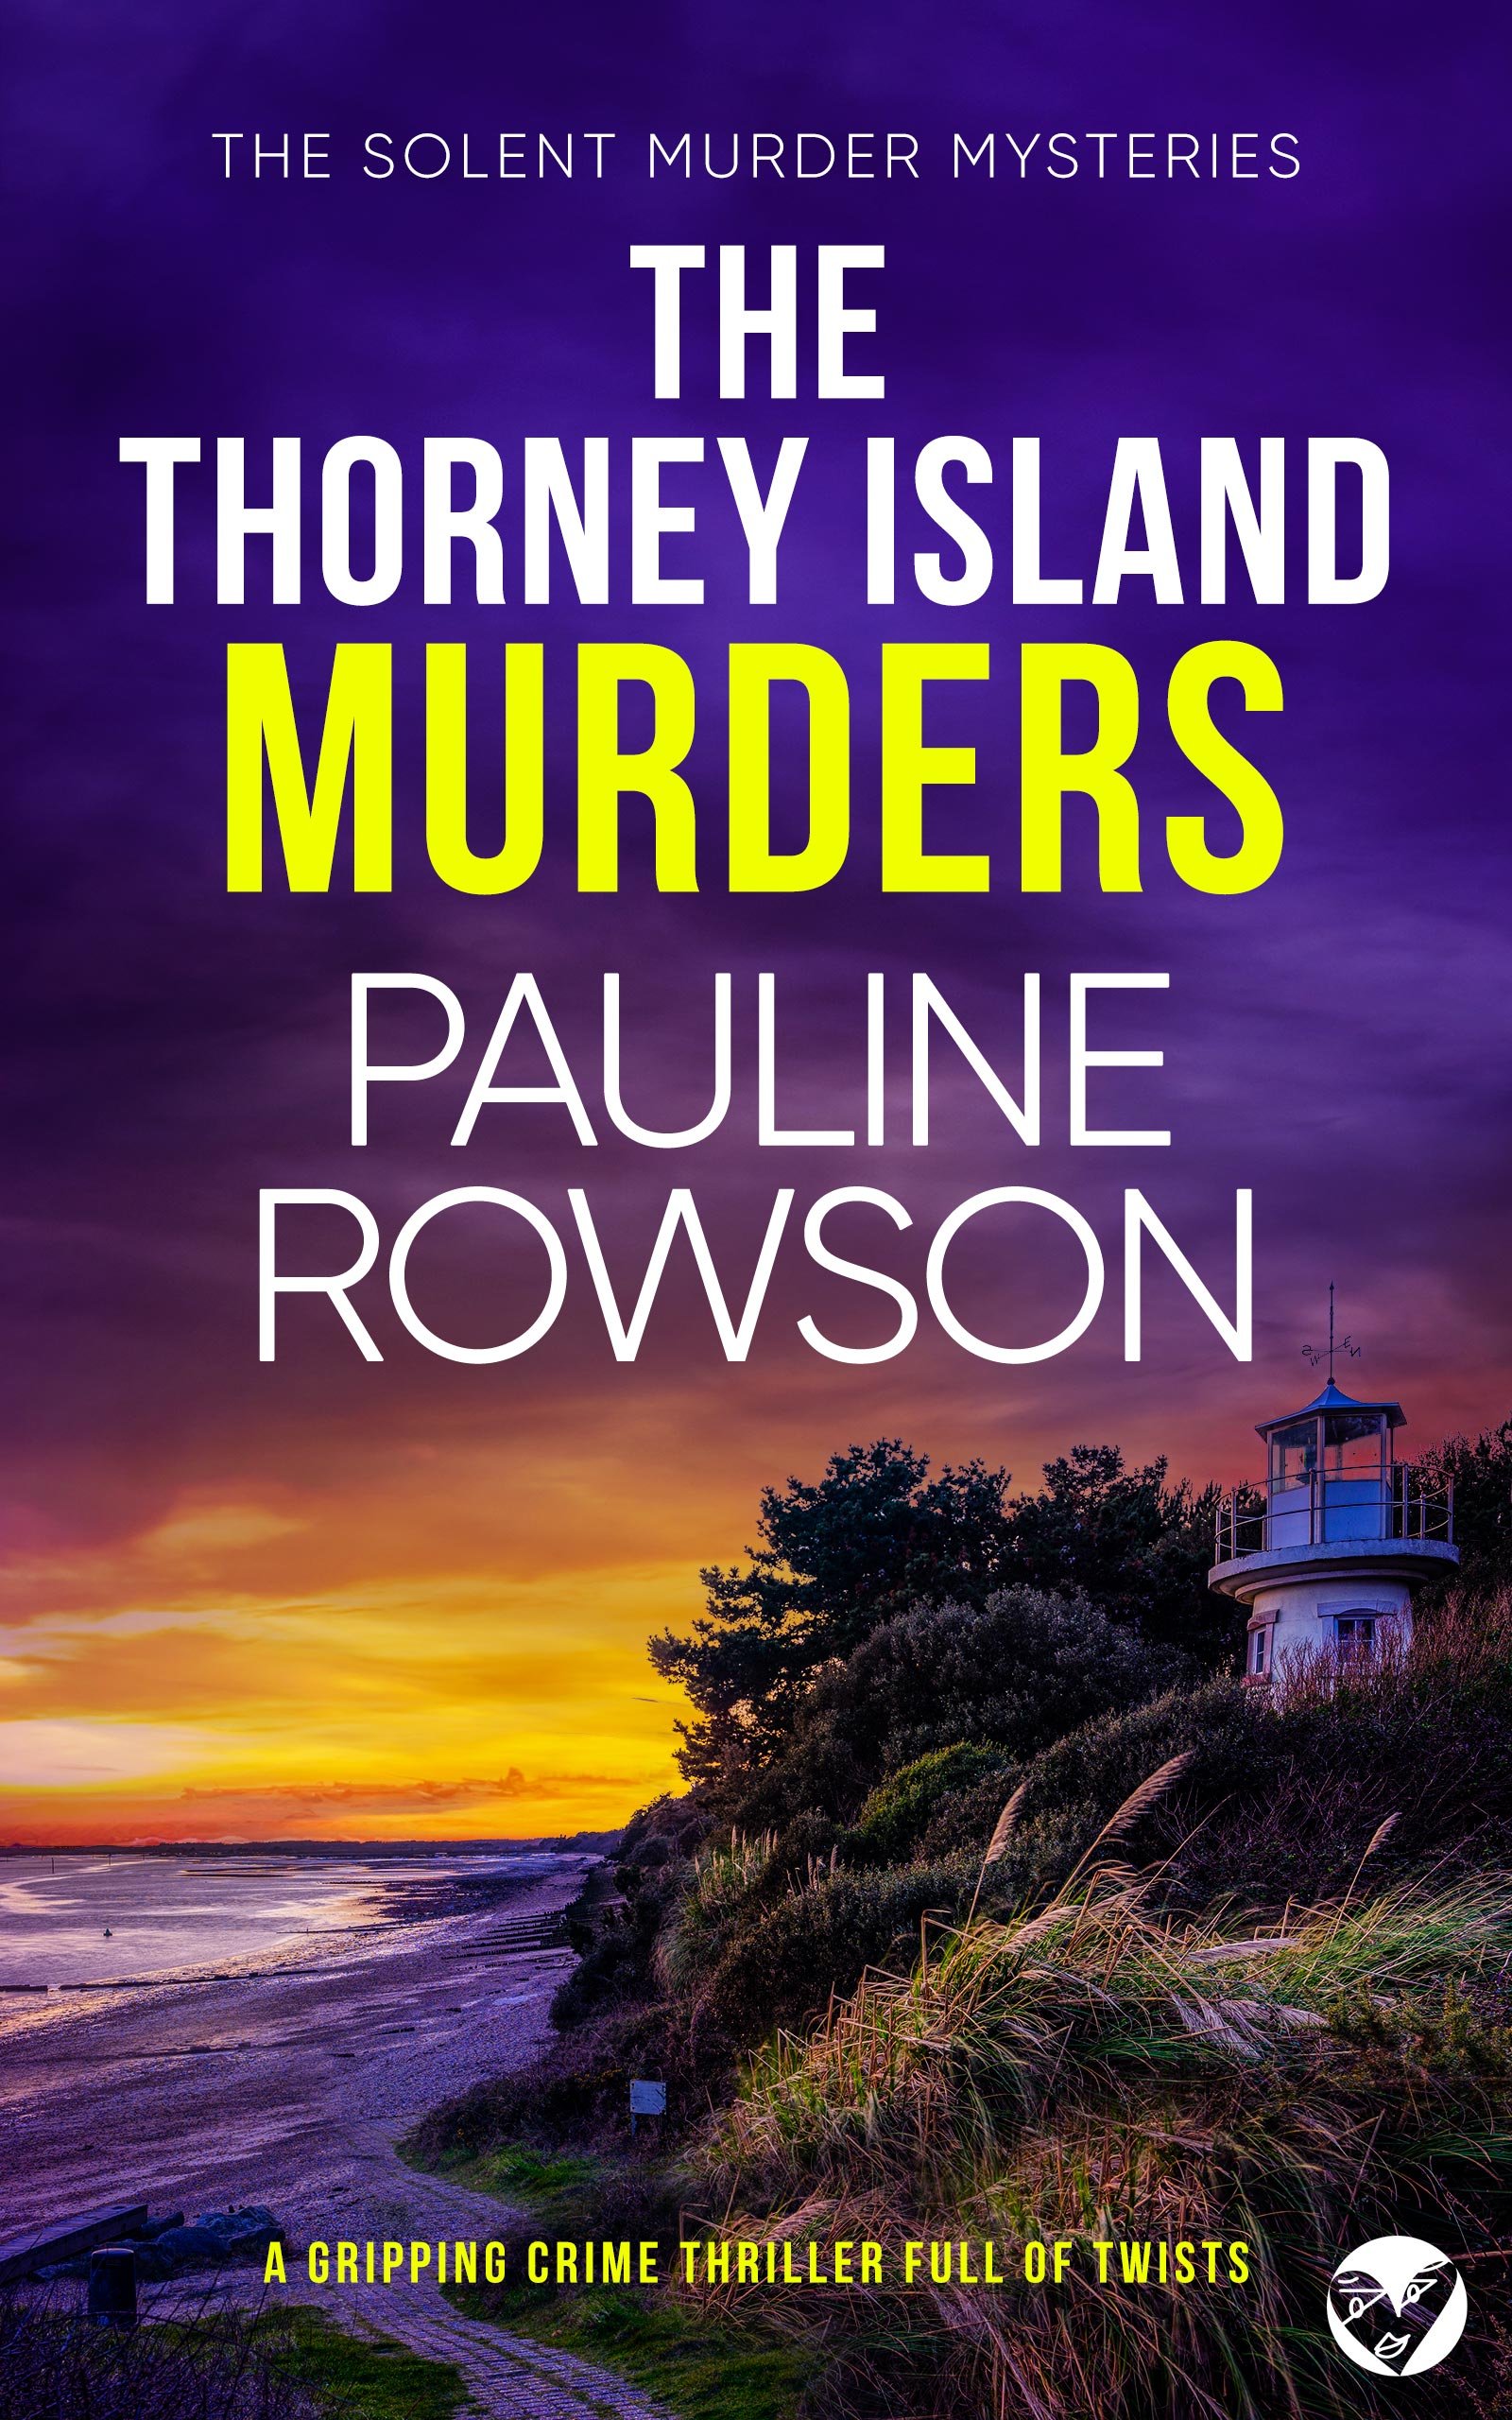 THE THORNEY ISLAND MURDERS Cover publish 651KB.jpg